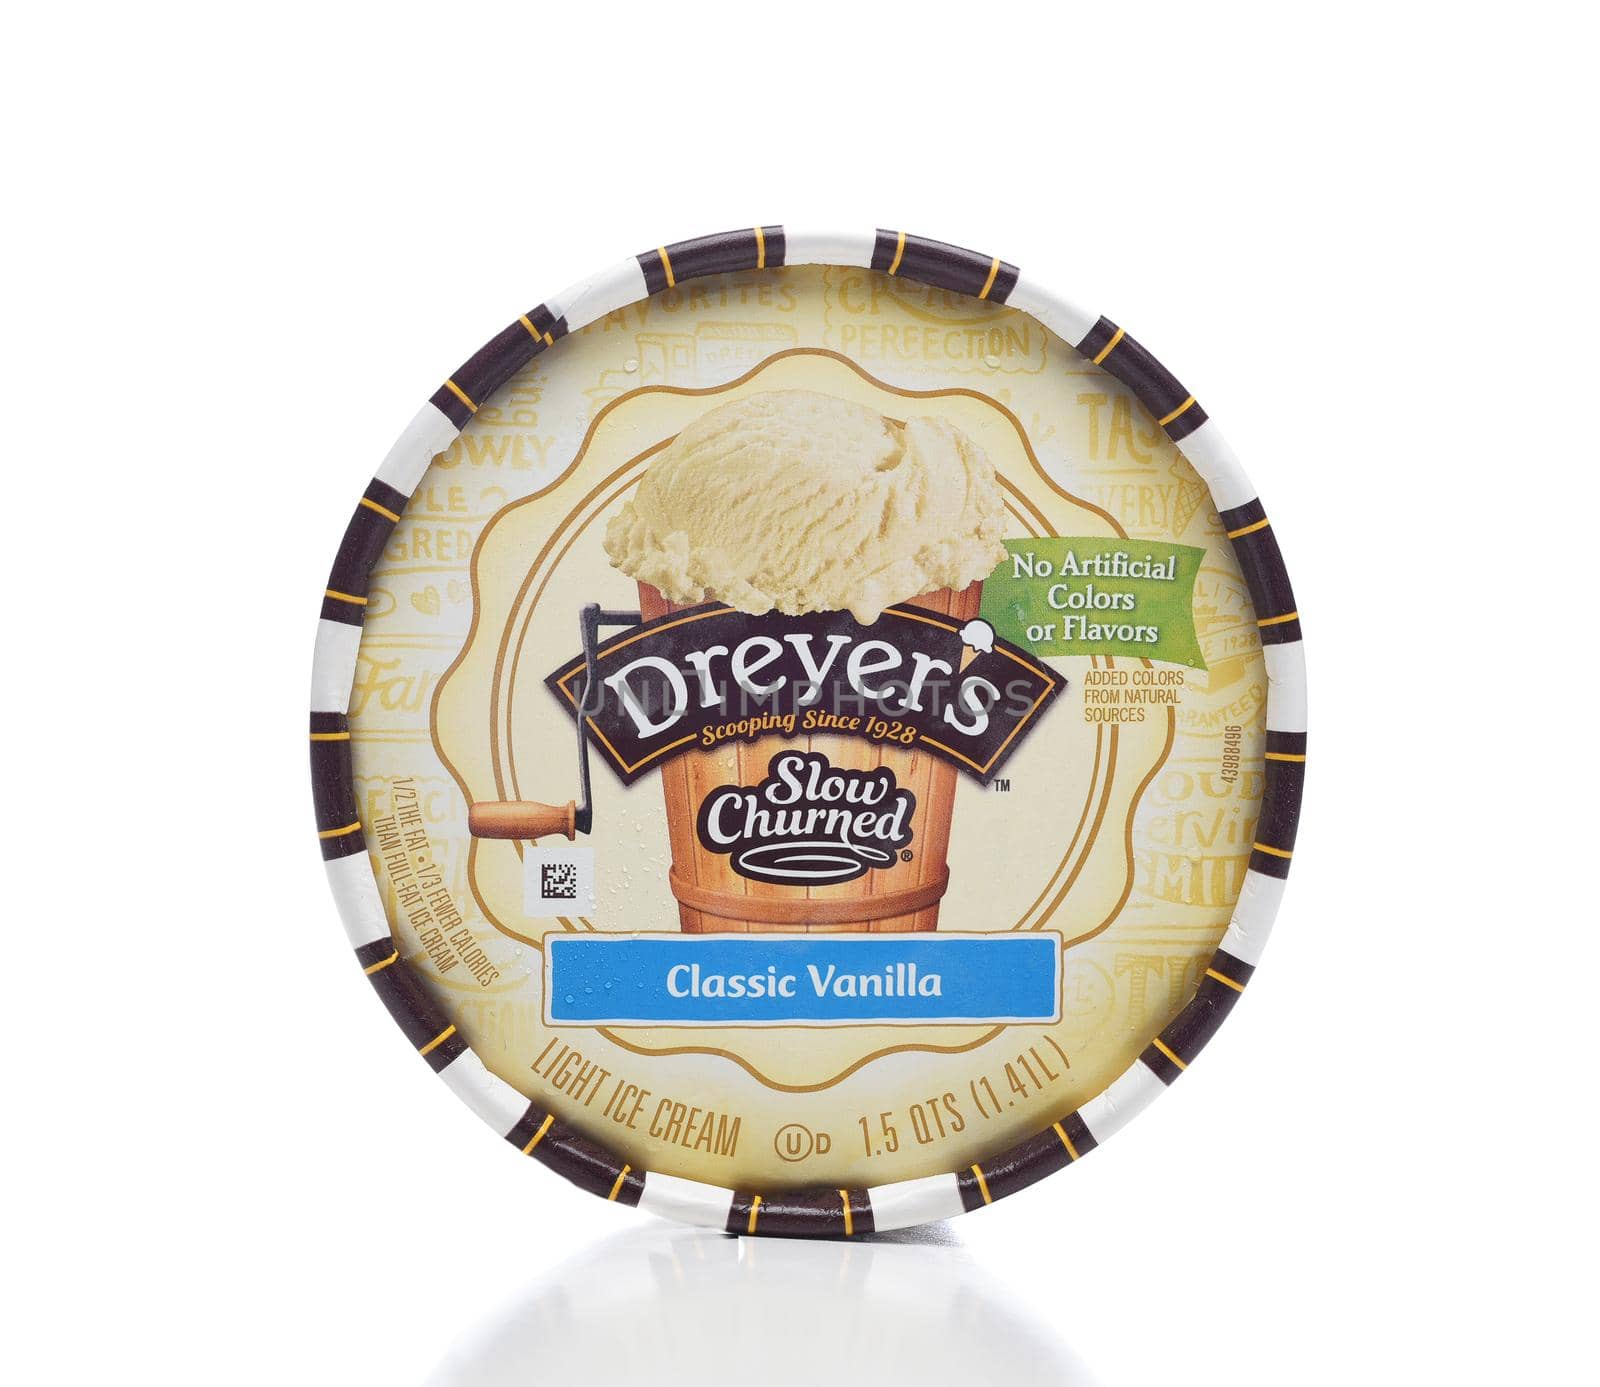 IRIVNE, CALIFORNIA - 4 JULY 2021: A Carton of Dreyers Slow Churned Classic Vanilla Ice Cream, top view of the lid.